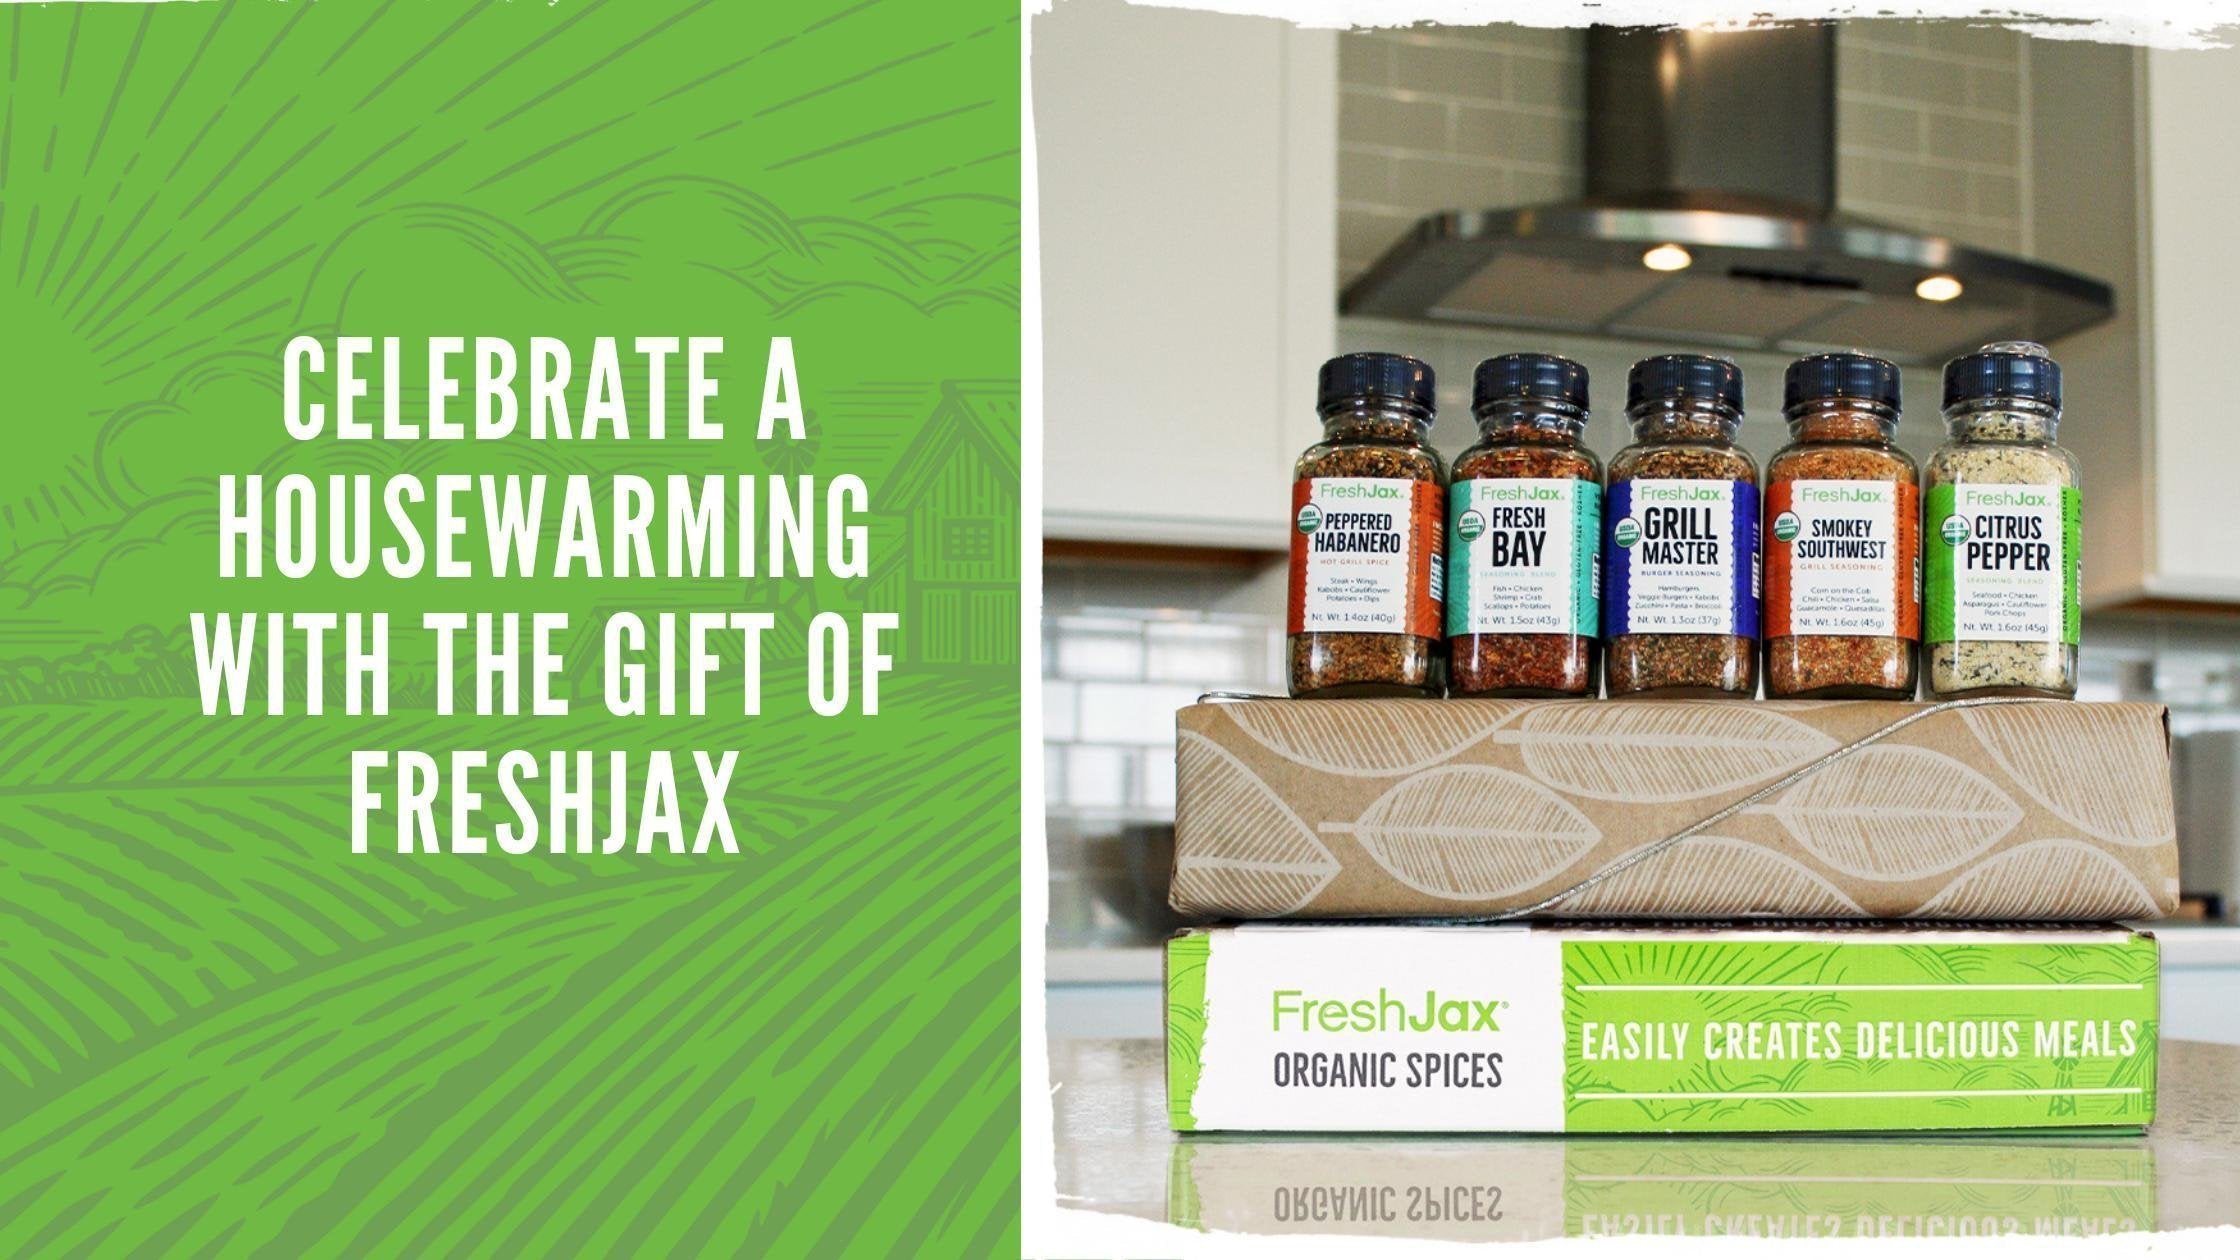 freshjax organic spices useful housewarming gifts